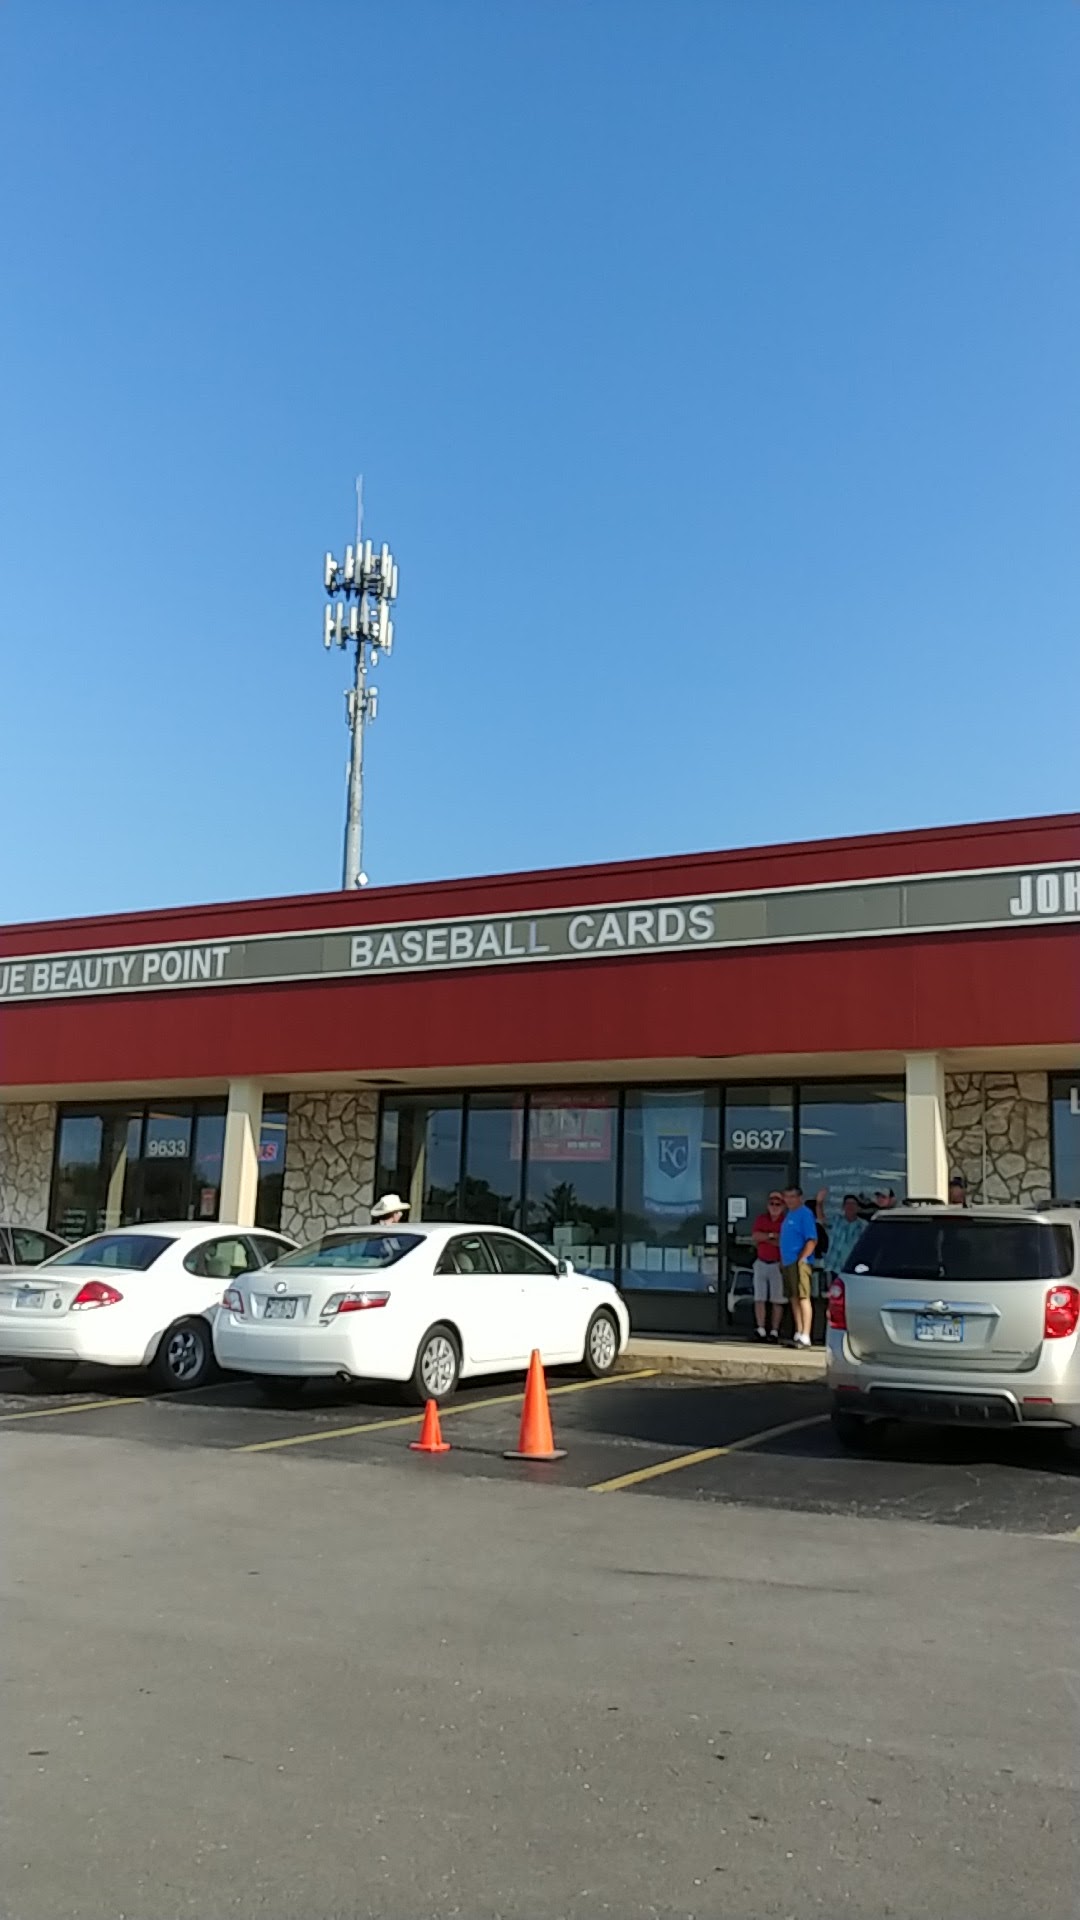 The Baseball Card Store